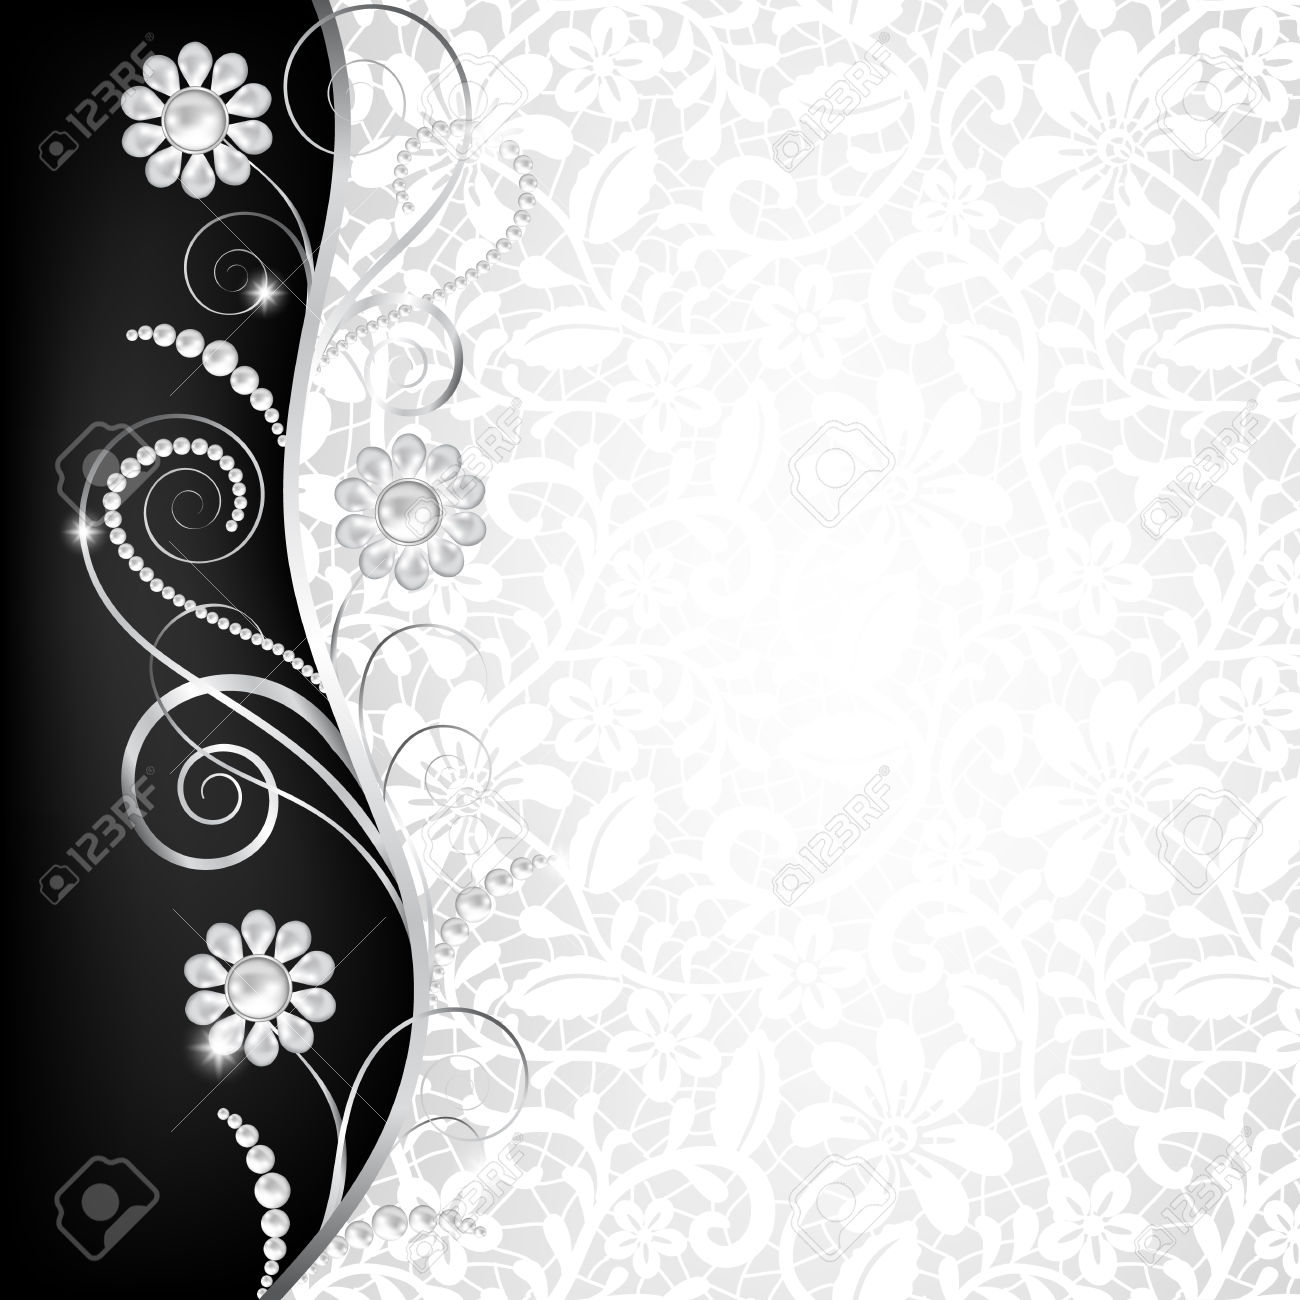 vip 벽지 hd,본문,무늬,검정색과 흰색,디자인,꽃 무늬 디자인